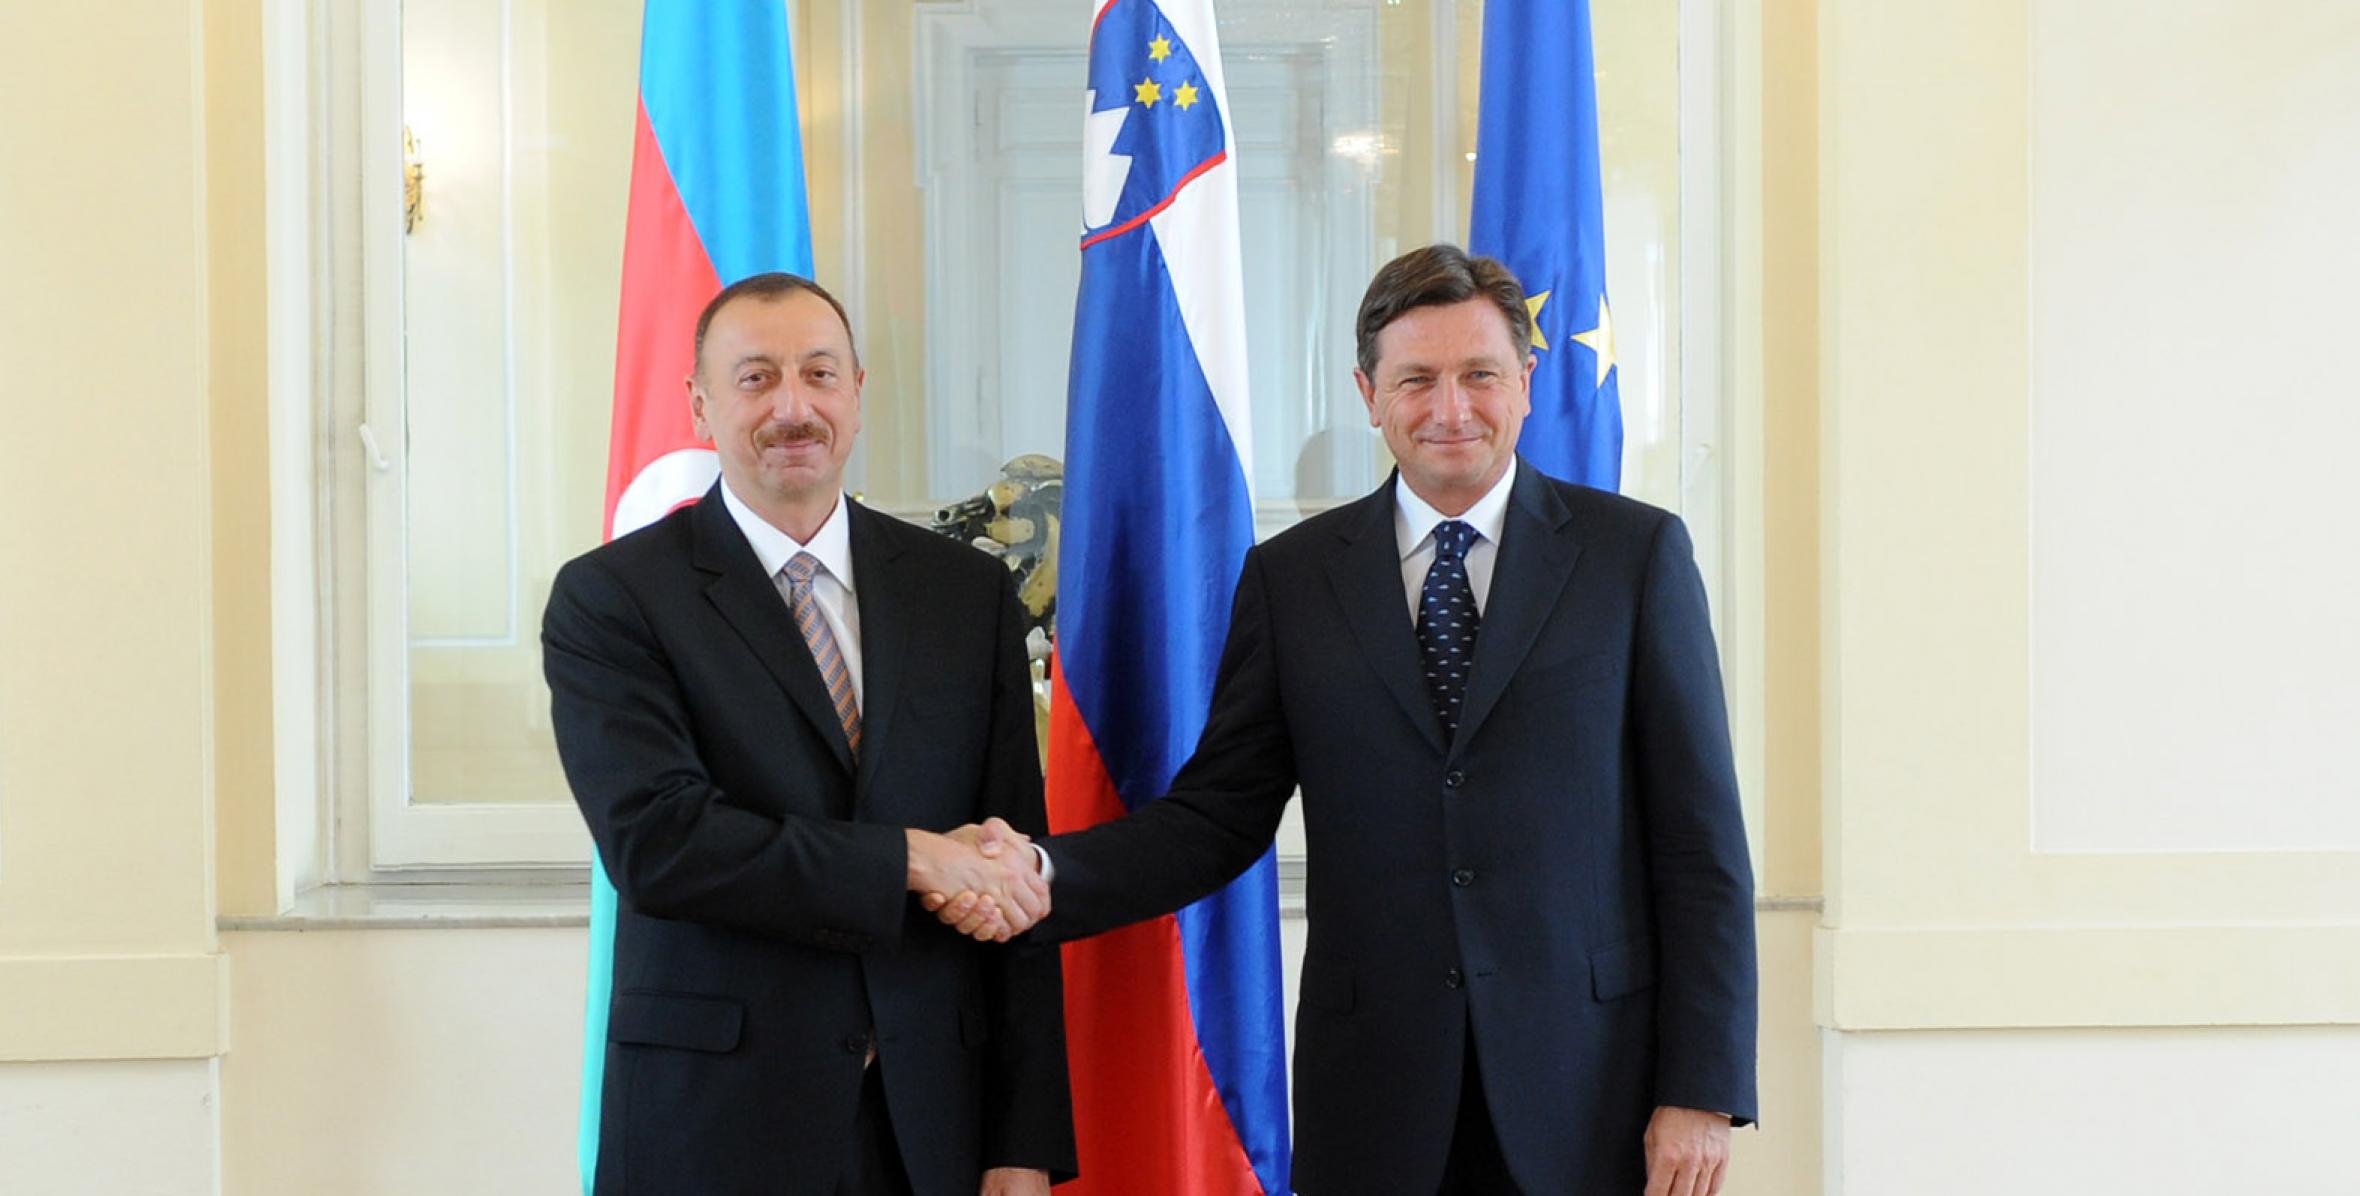 Ilham Aliyev met with Prime Minister of the Republic of Slovenia Borut Pahor